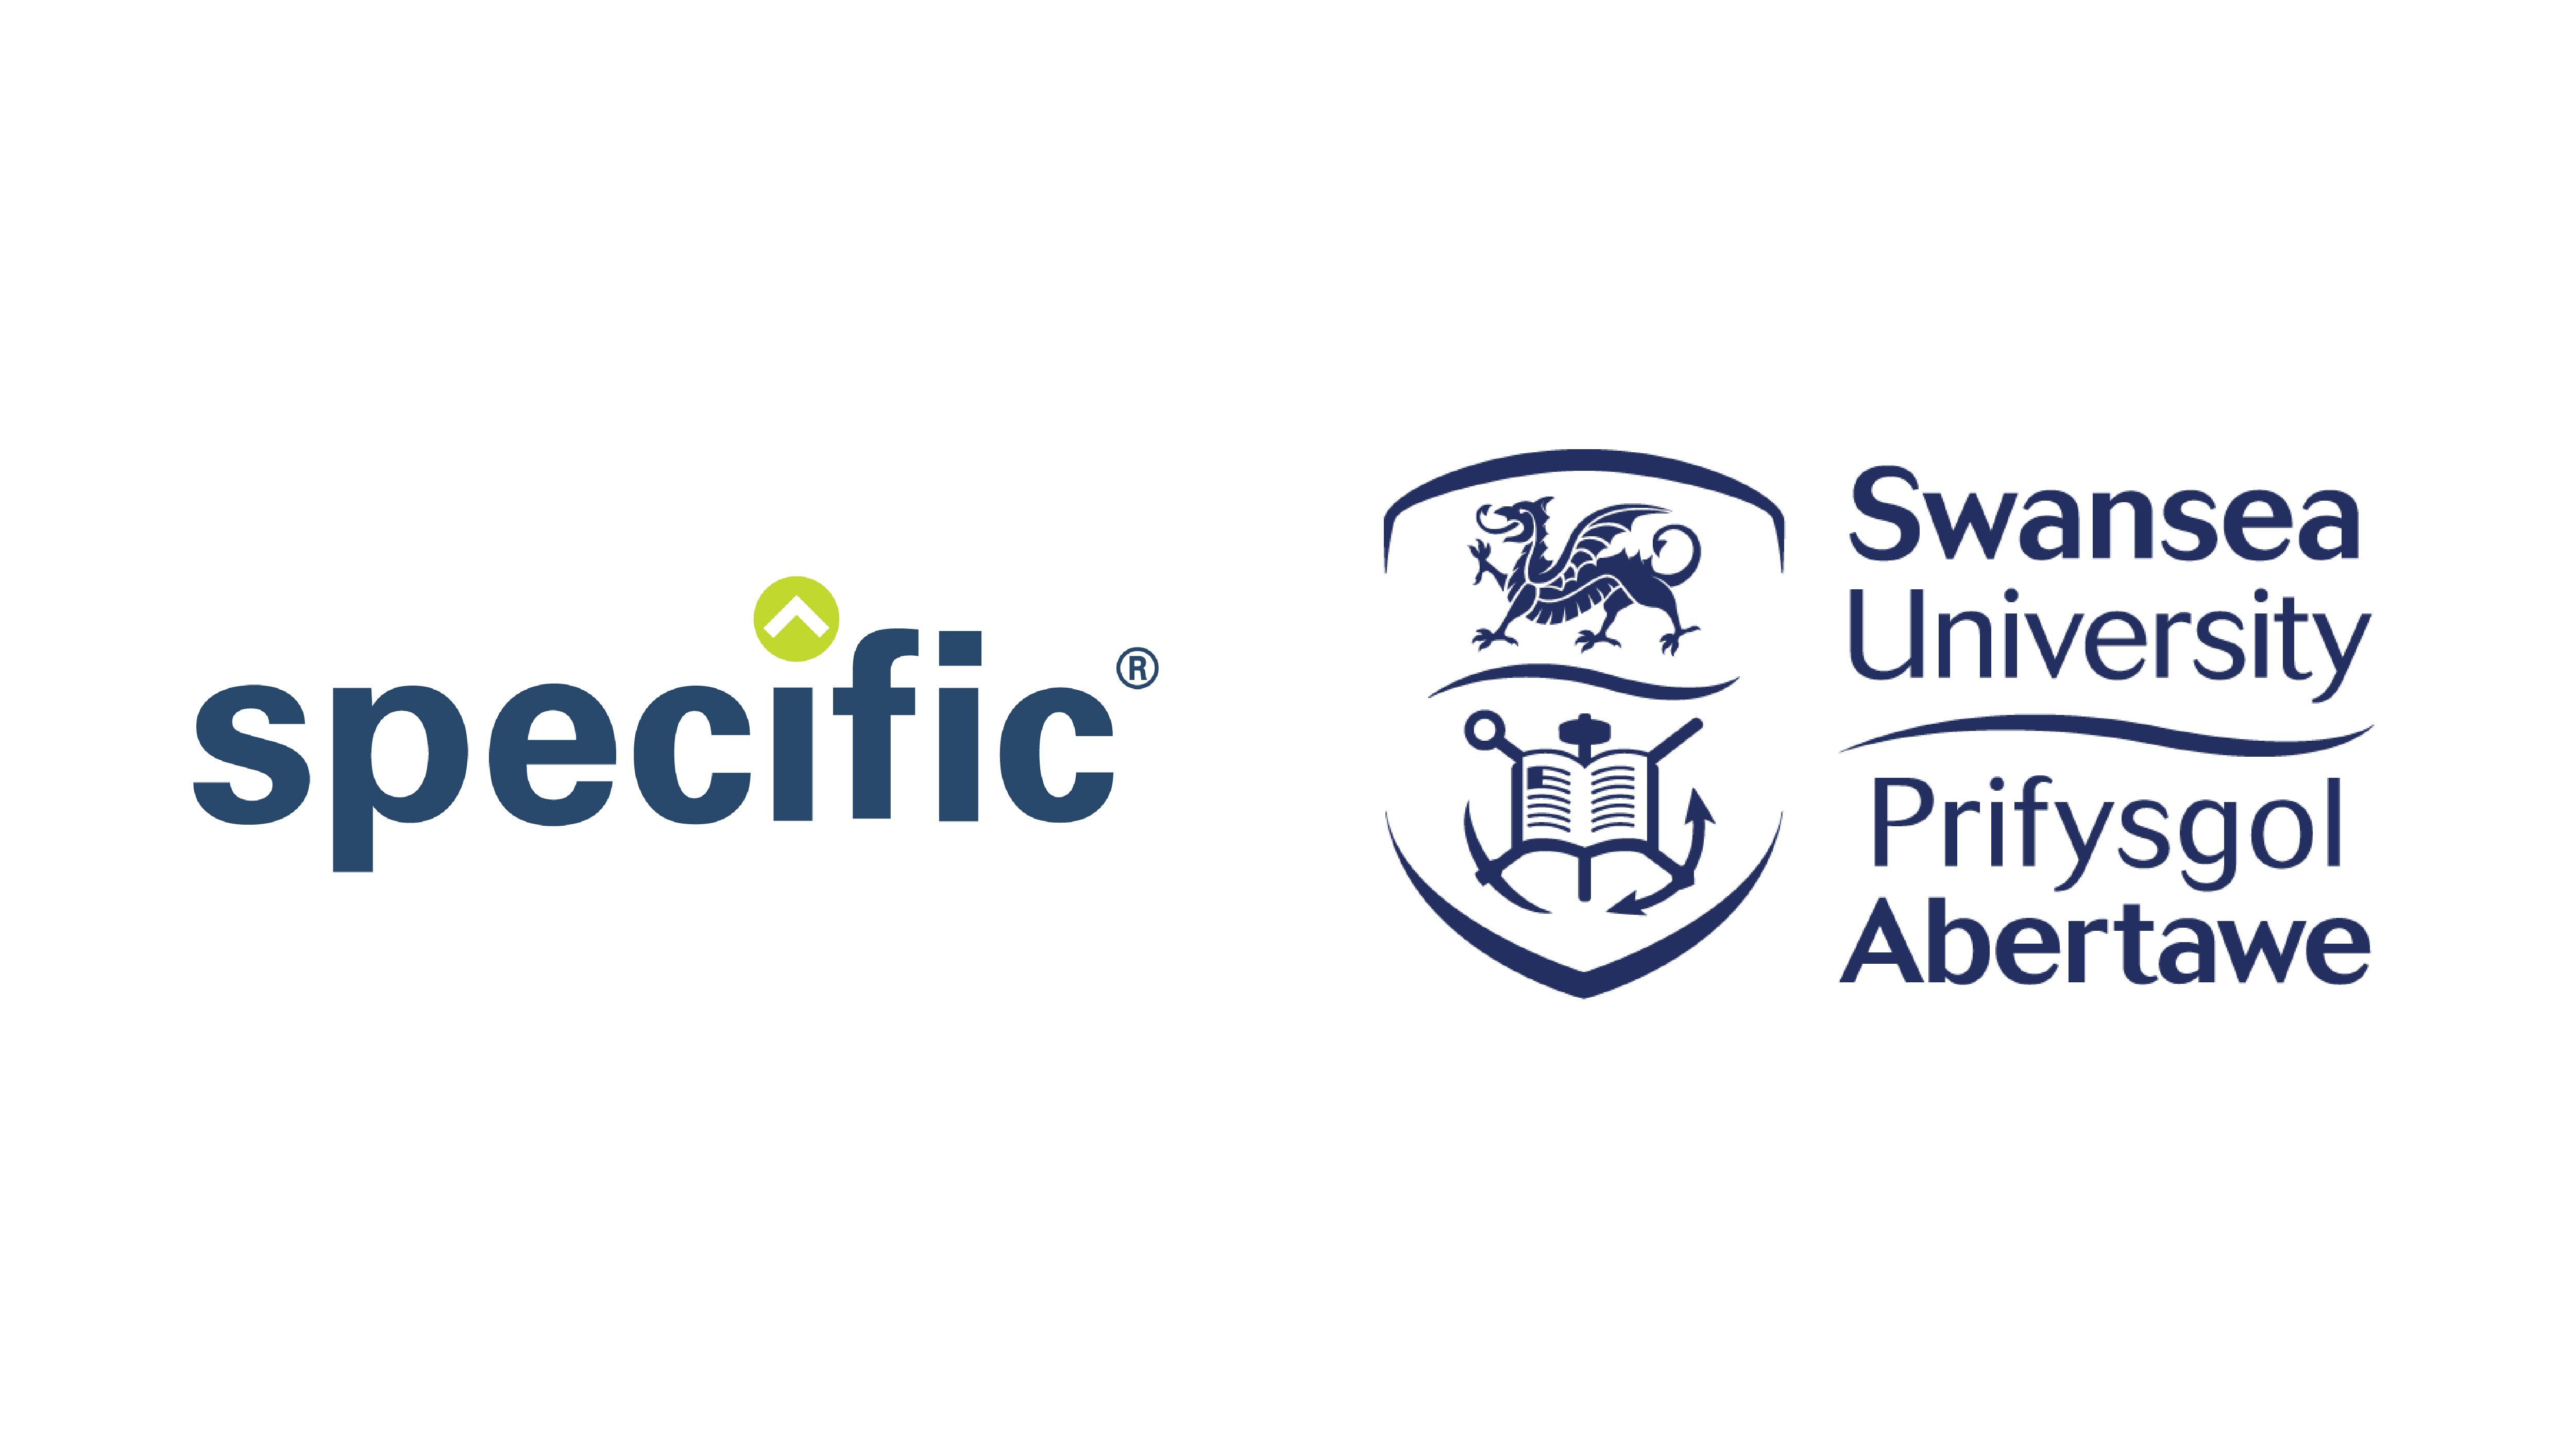 Specific Swansea university logo on a white background. 